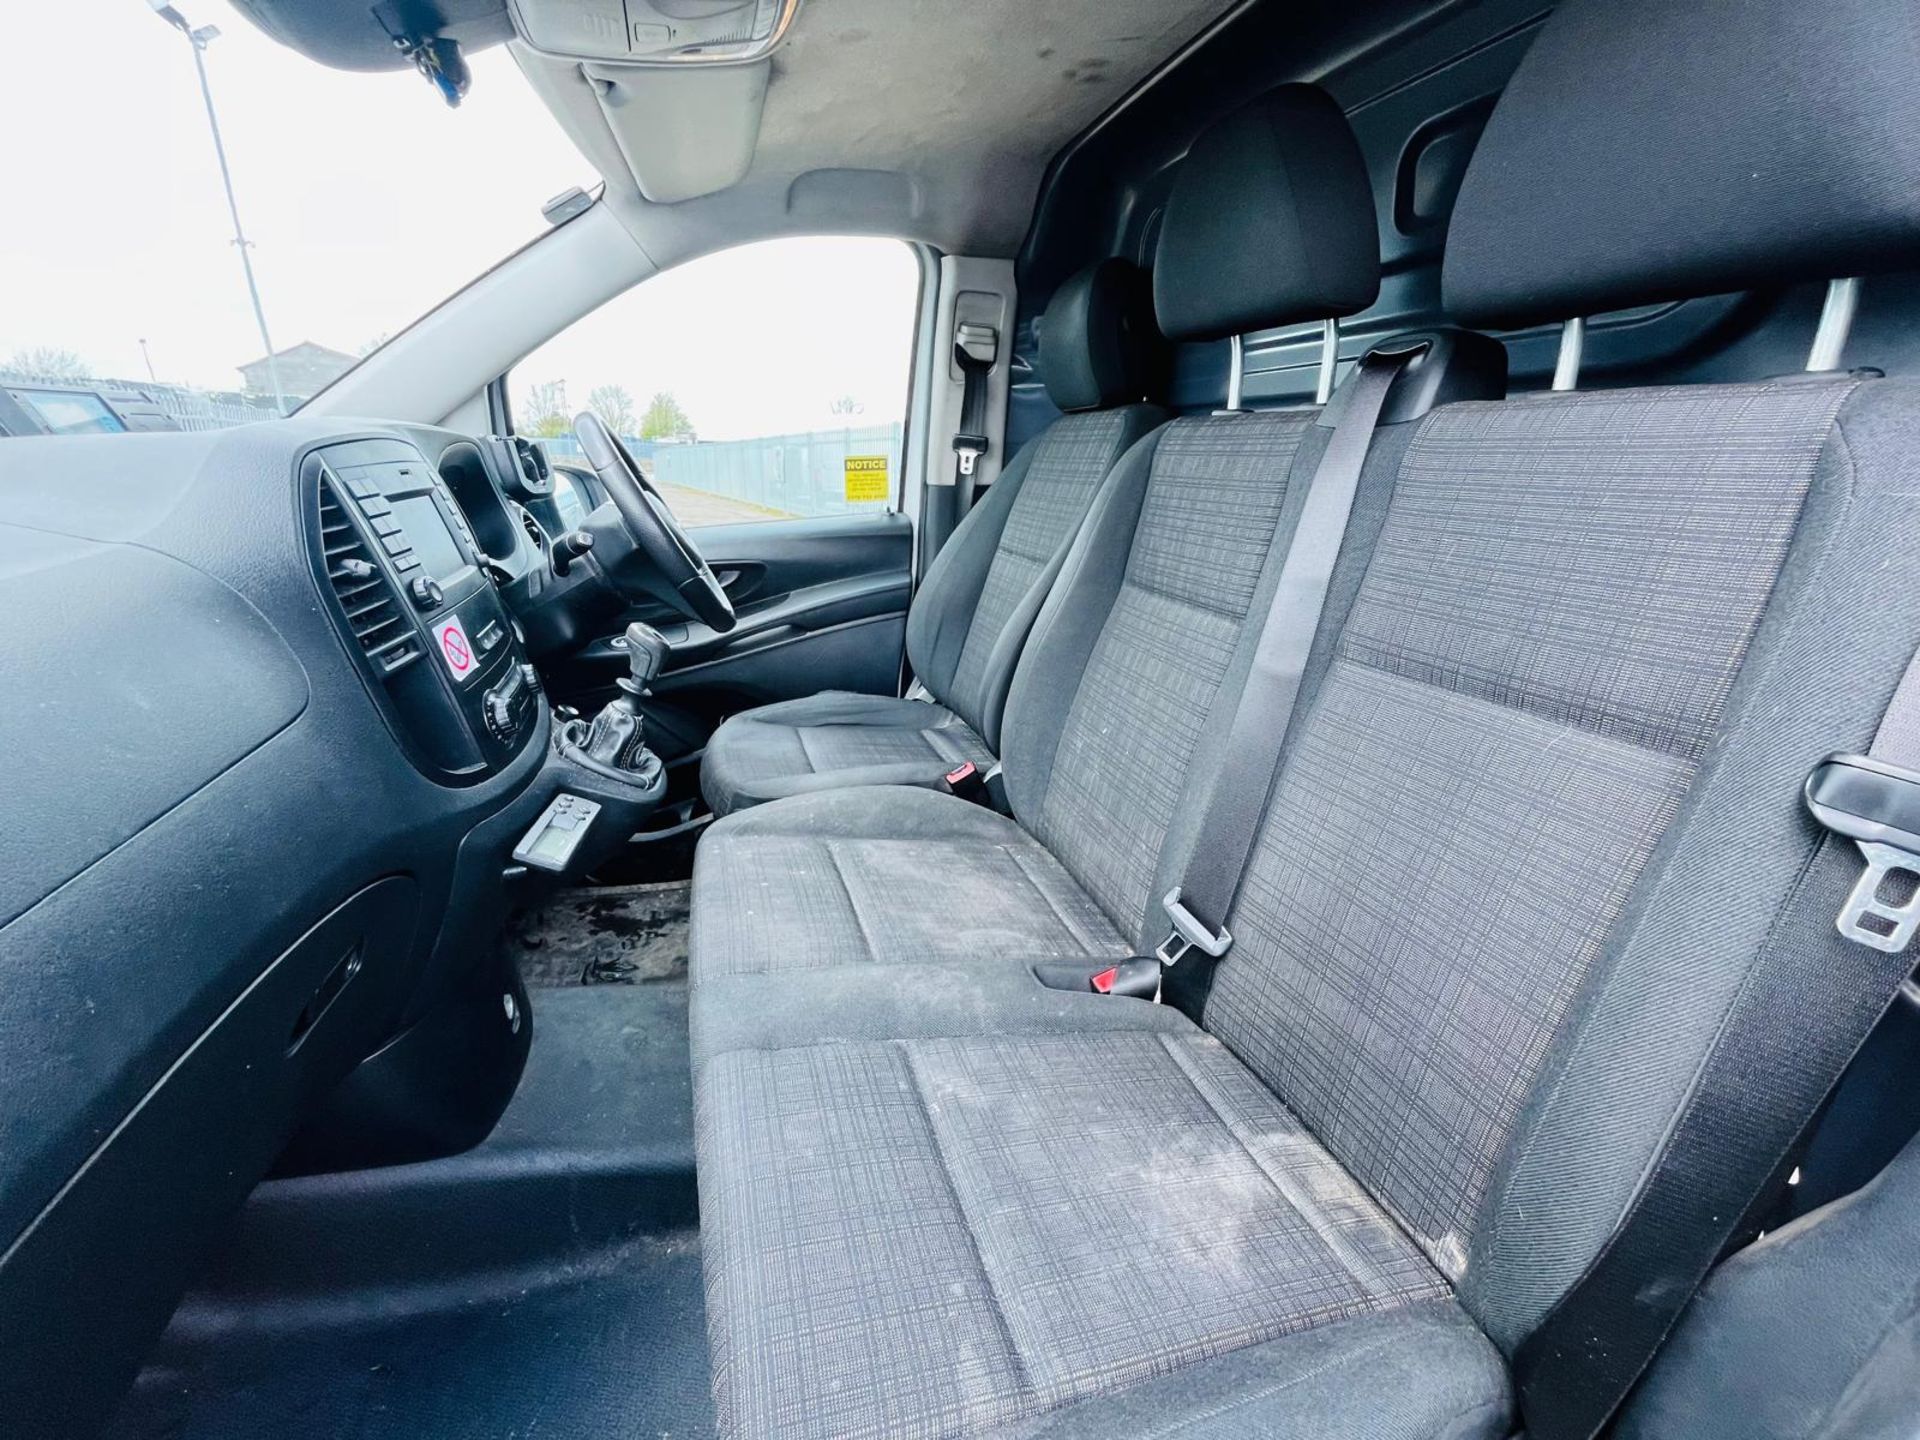 Mercedes Benz Vito 114 CDI RWD Fridge/Freezer 2.1 2019 '19 Reg '-ULEZ Compliant-Parking Sensors-A/C - Image 24 of 27